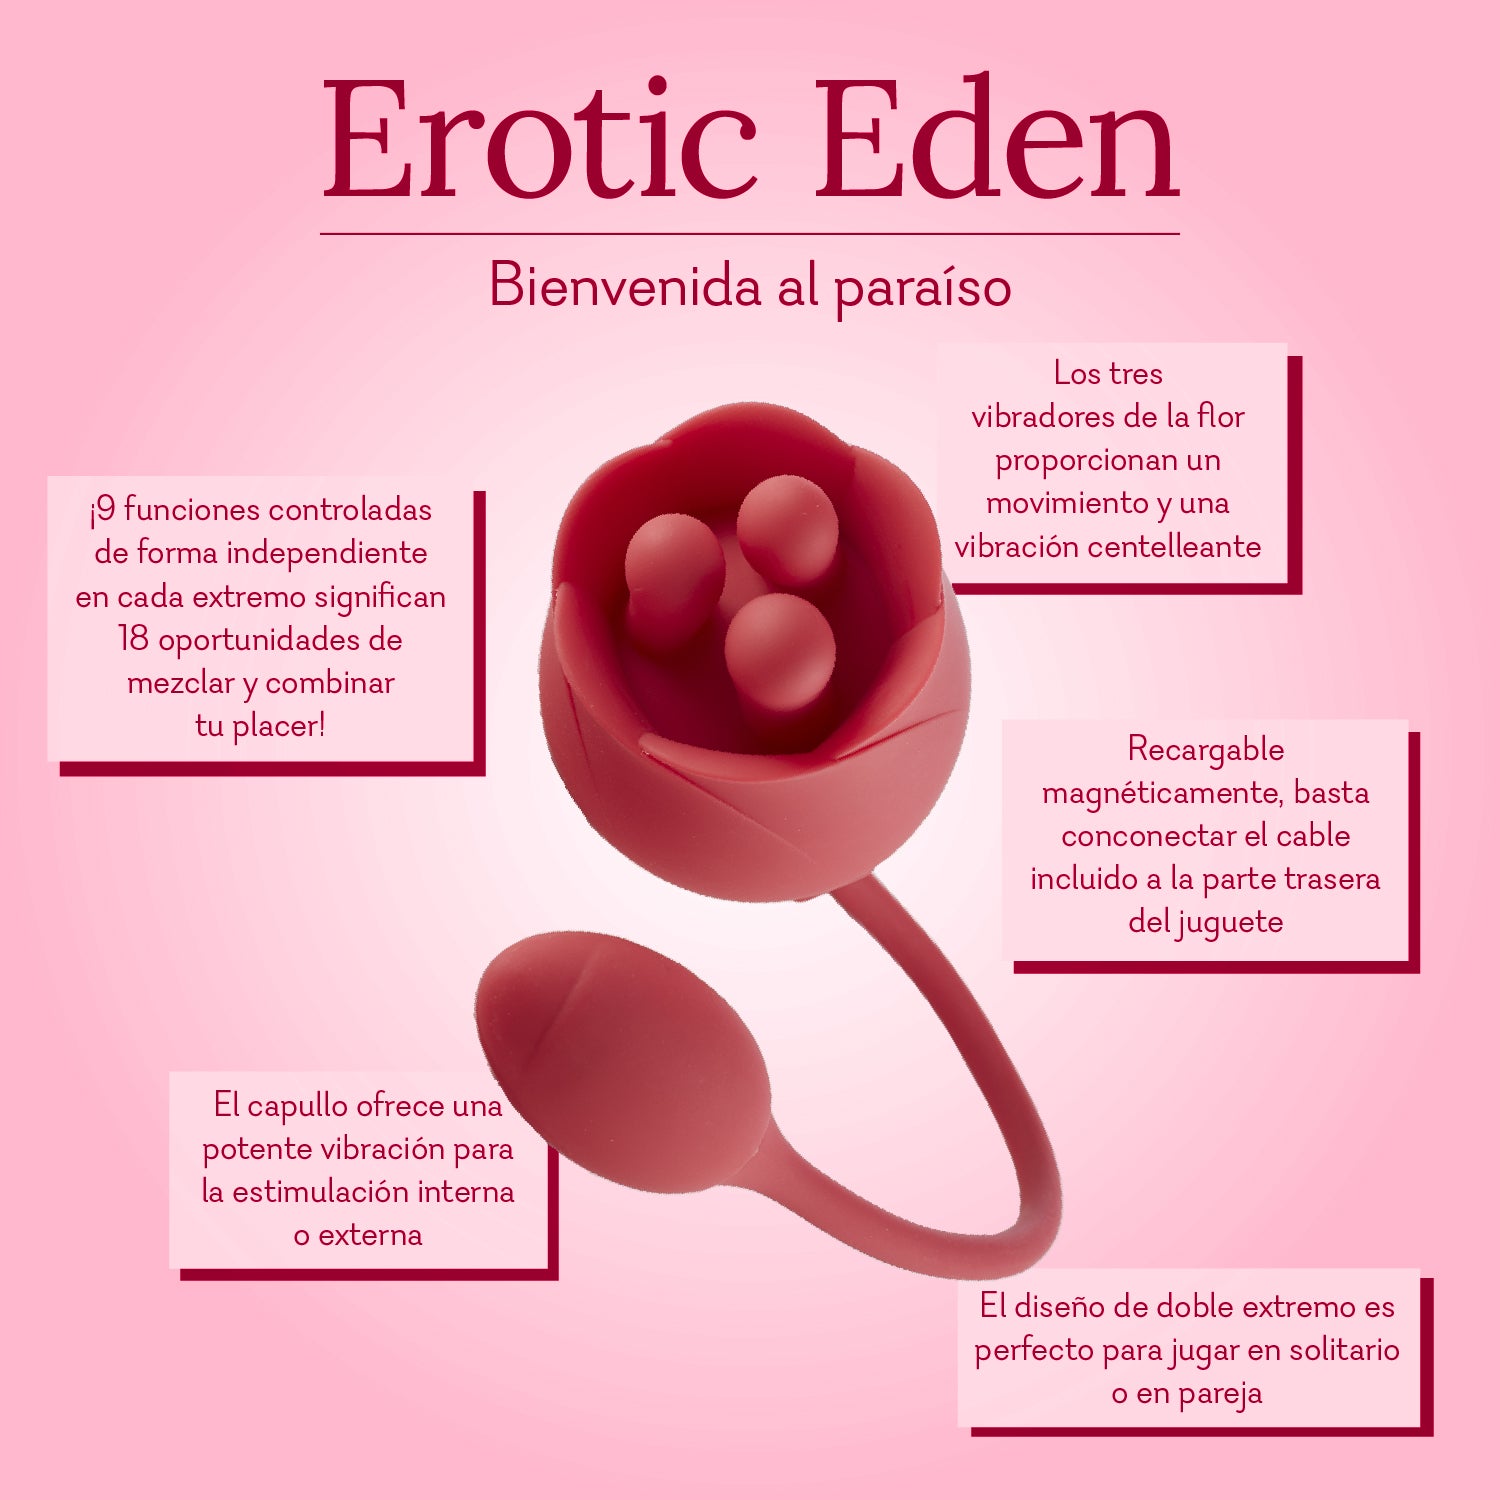 Erotic Eden Rose Vibrator Infographic Spanish Pure Romance